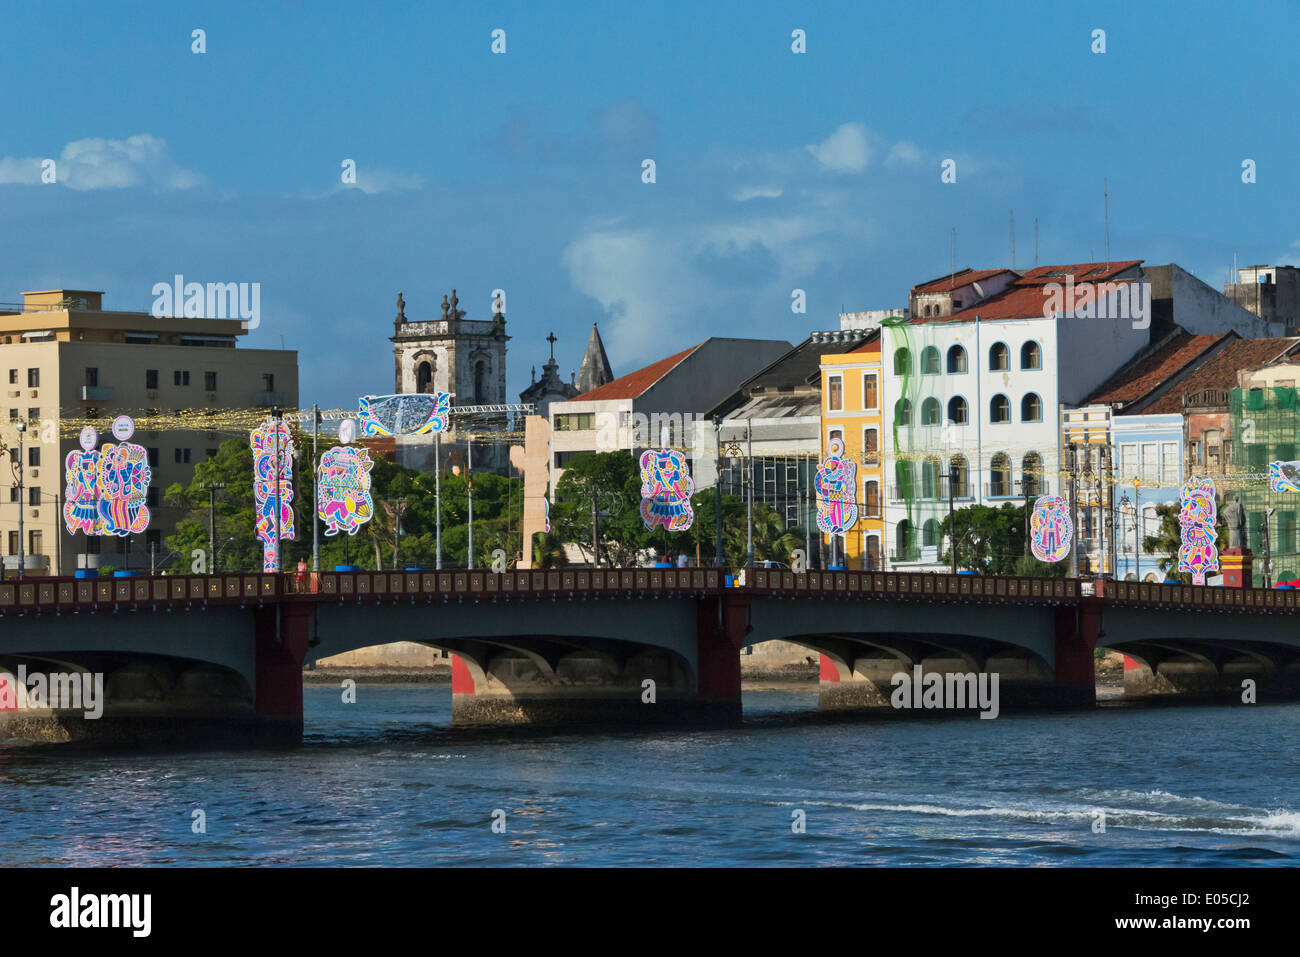 Bridge and buildings along the river, Recife, Pernambuco State, Brazil Stock Photo